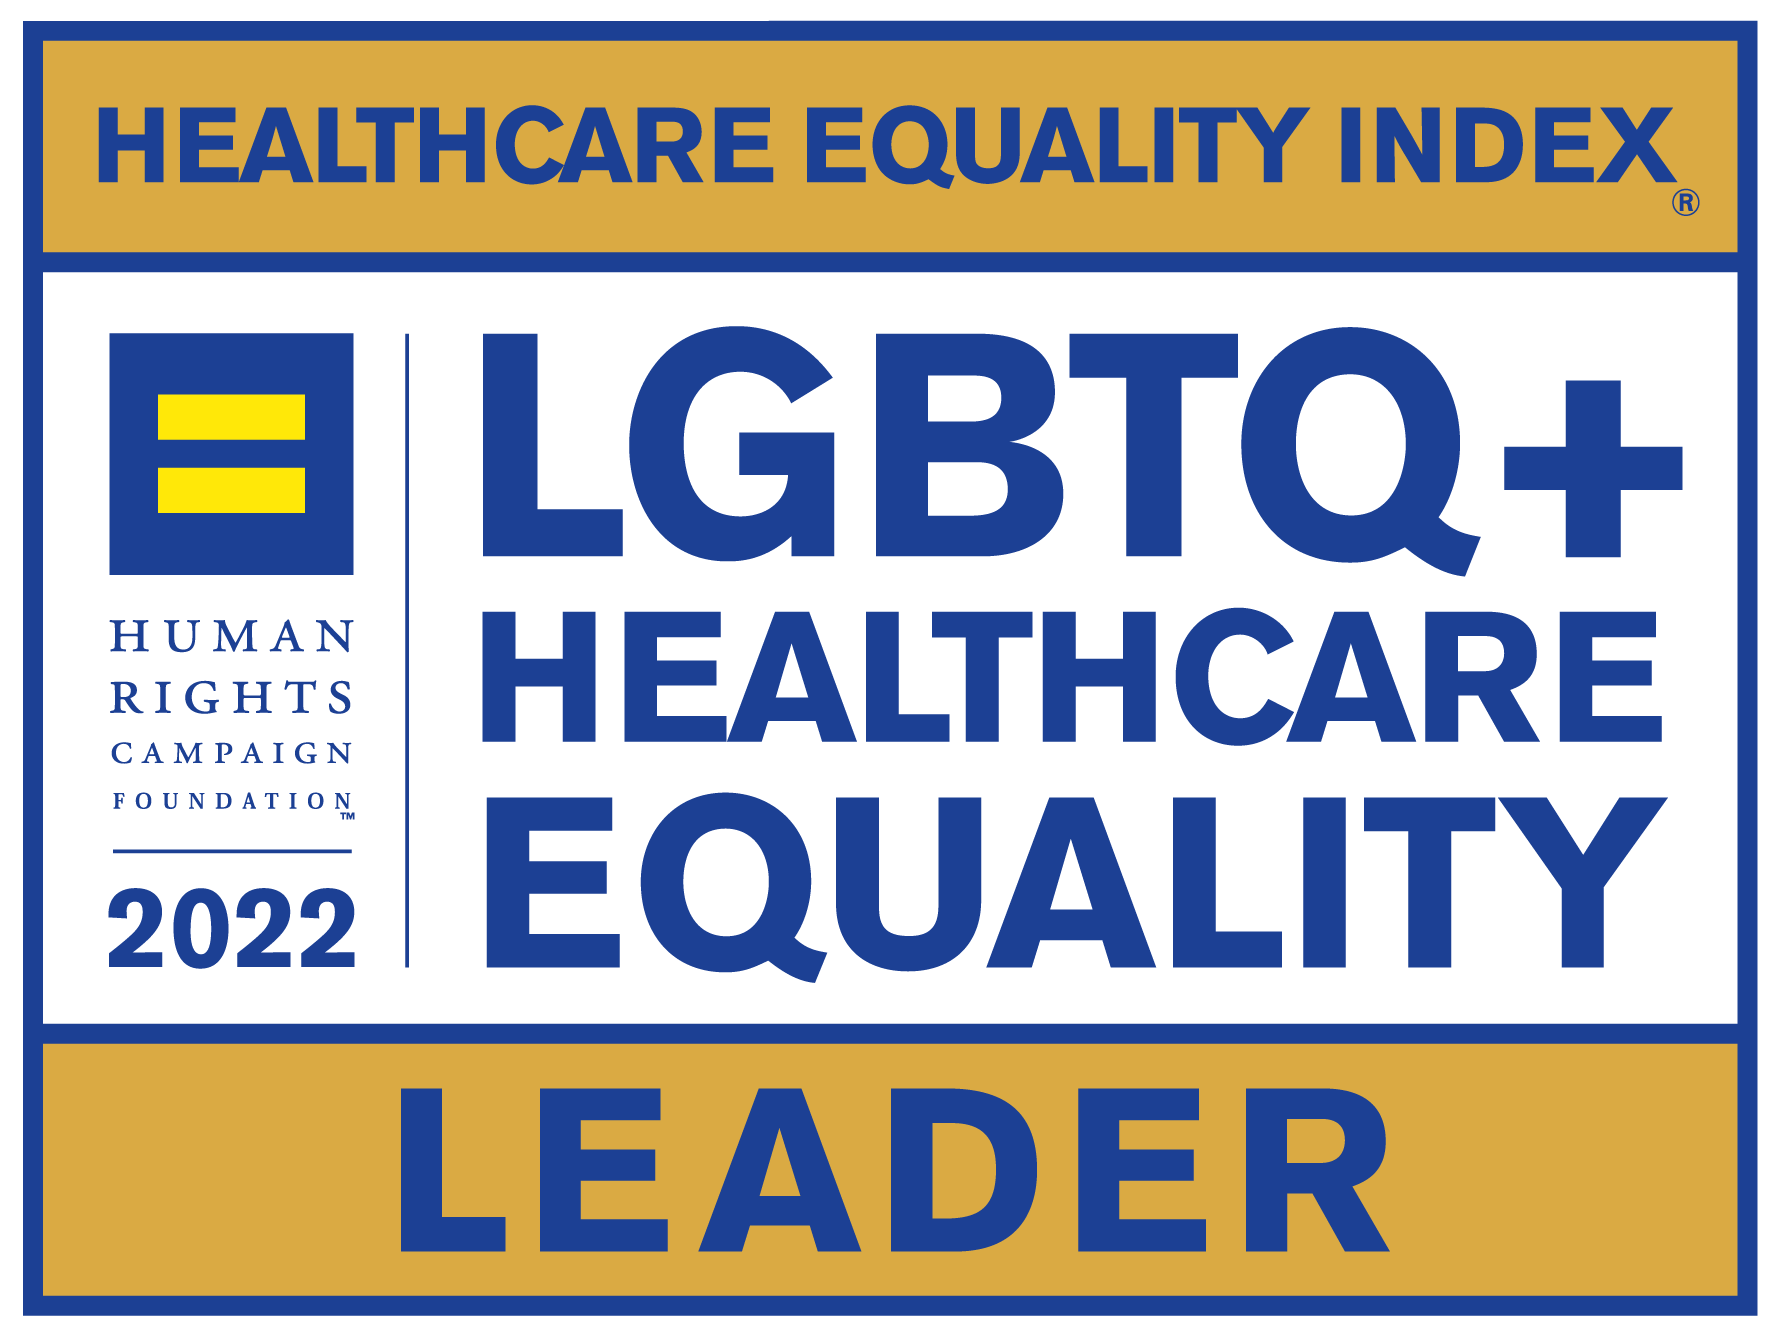 HRC LGBTQ Healthcare Equality 2022